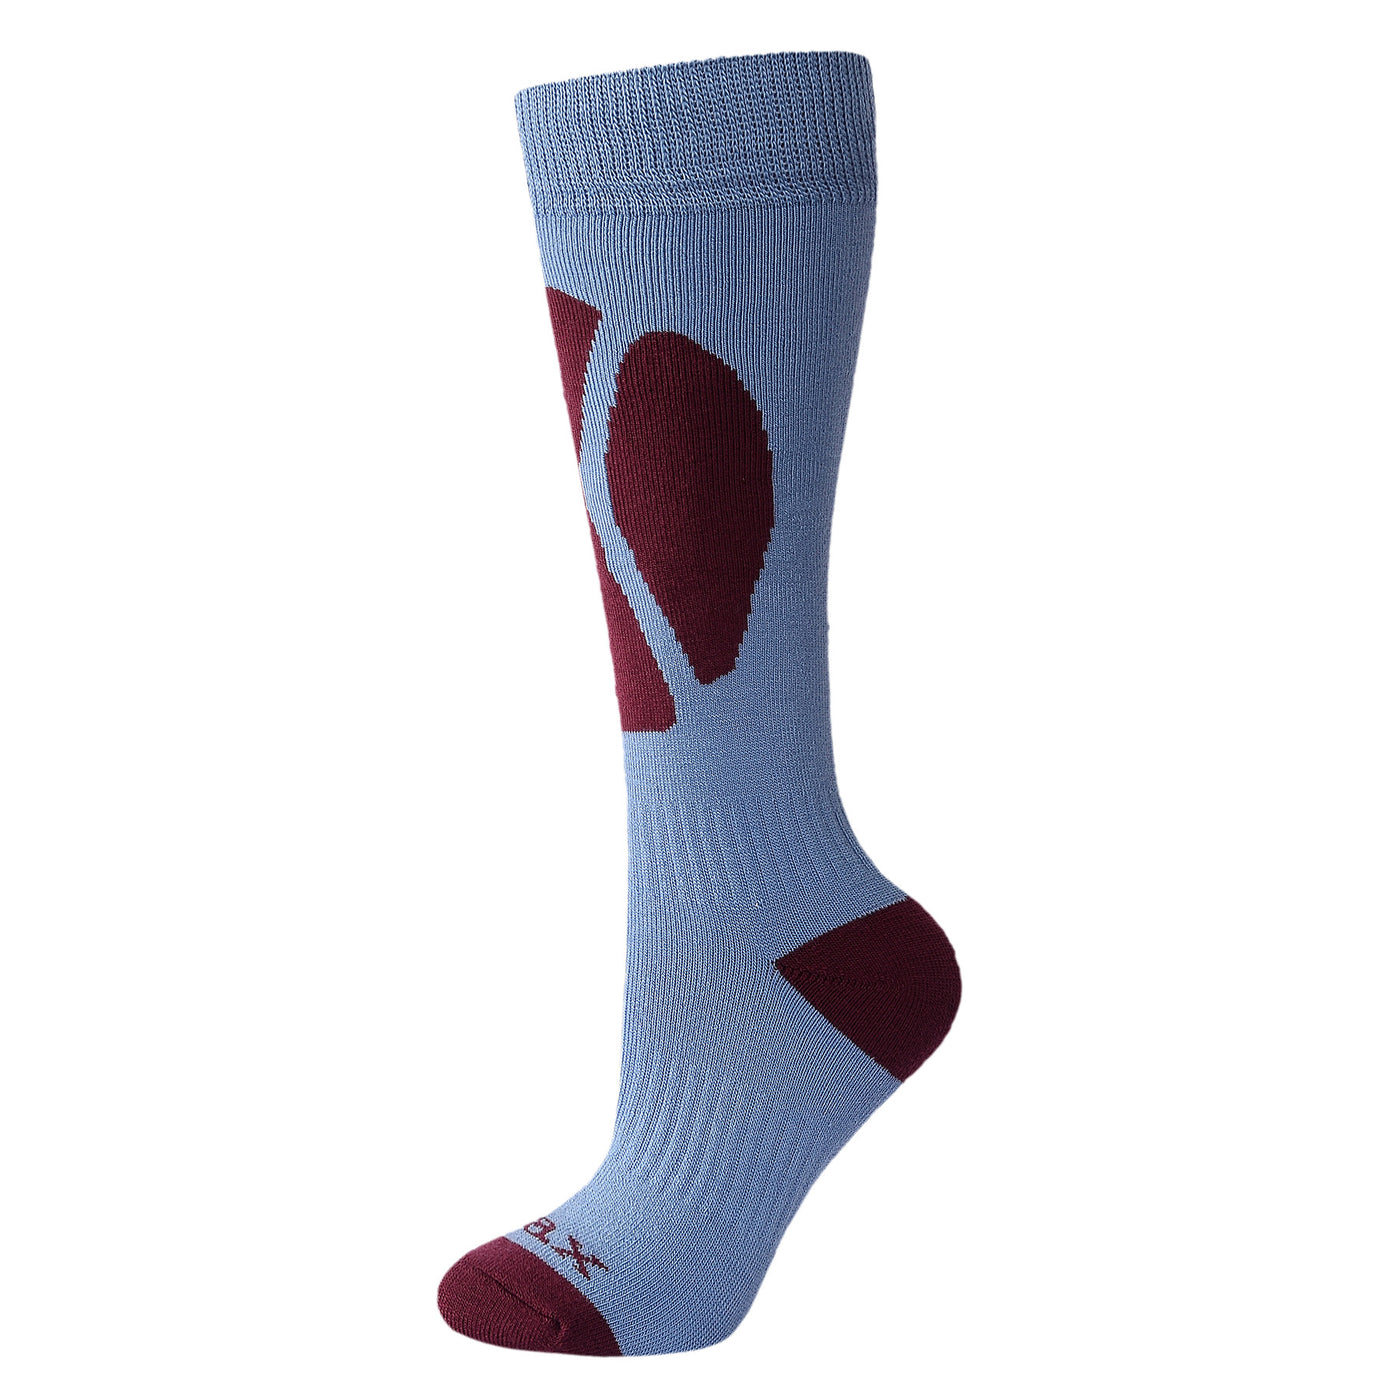 3 pares de calcetines de esquí largos tipo cachemir para mujer, talla UK 3 - 7 / Europa 36 - 40, set de regalo, rojo, rosa, azul